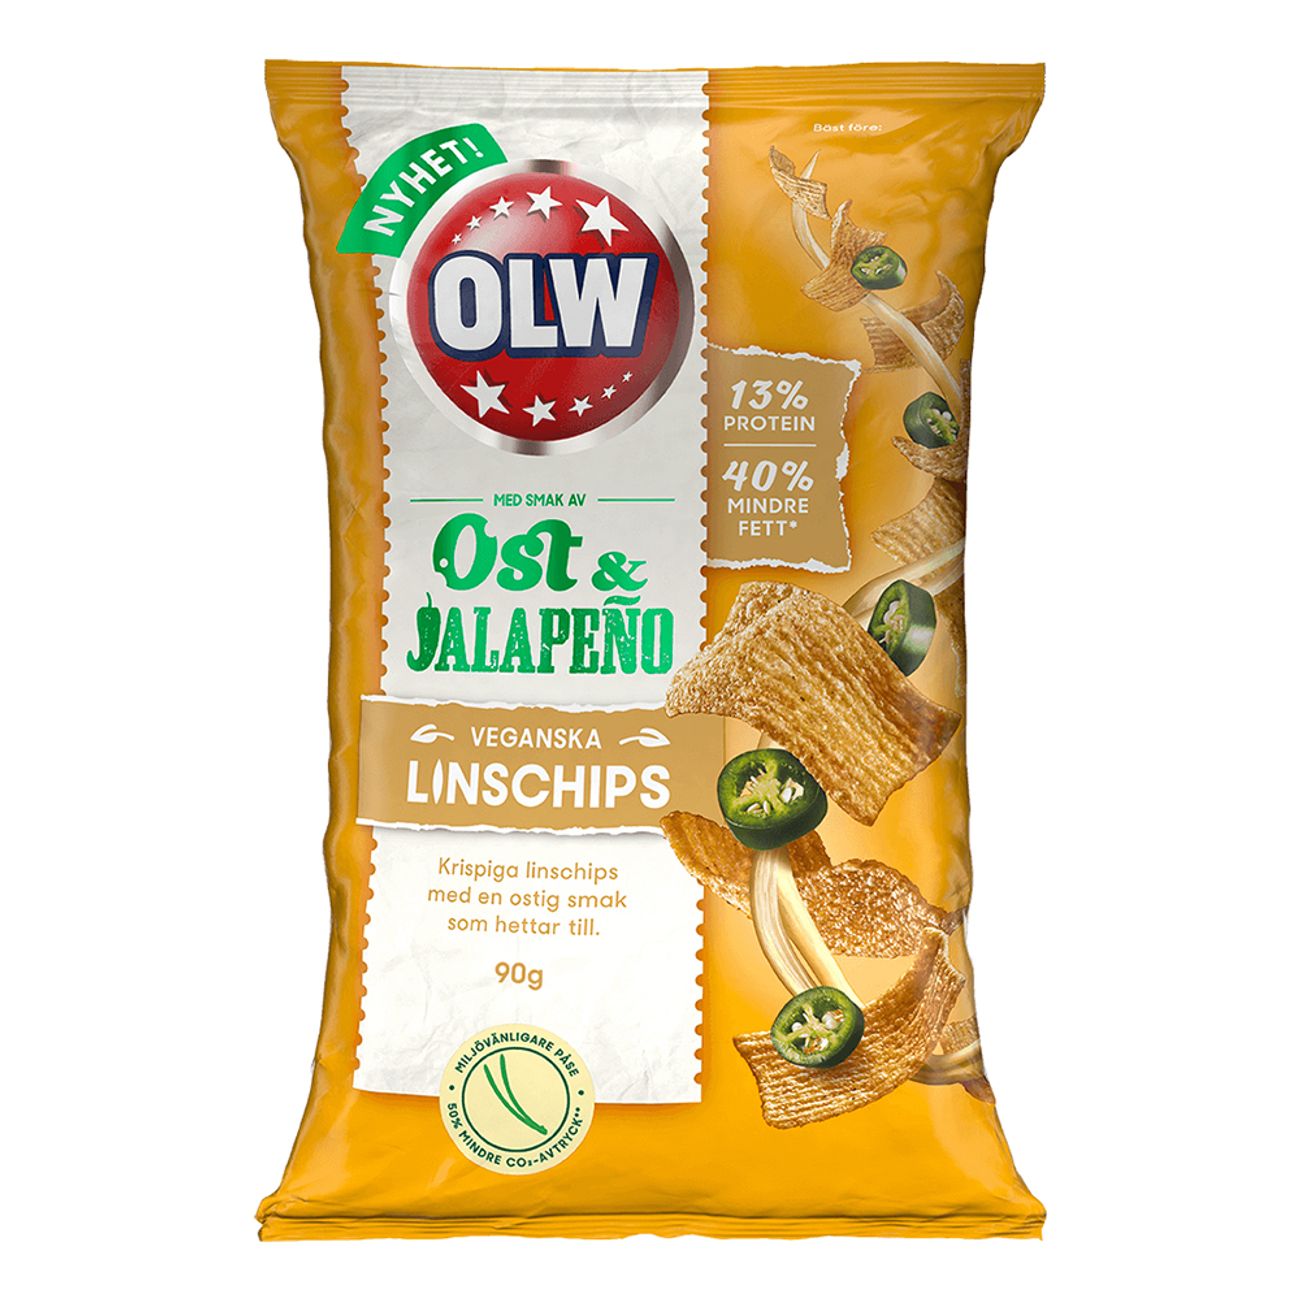 olw-linschips-ost-jalapeno-71621-4.jpg